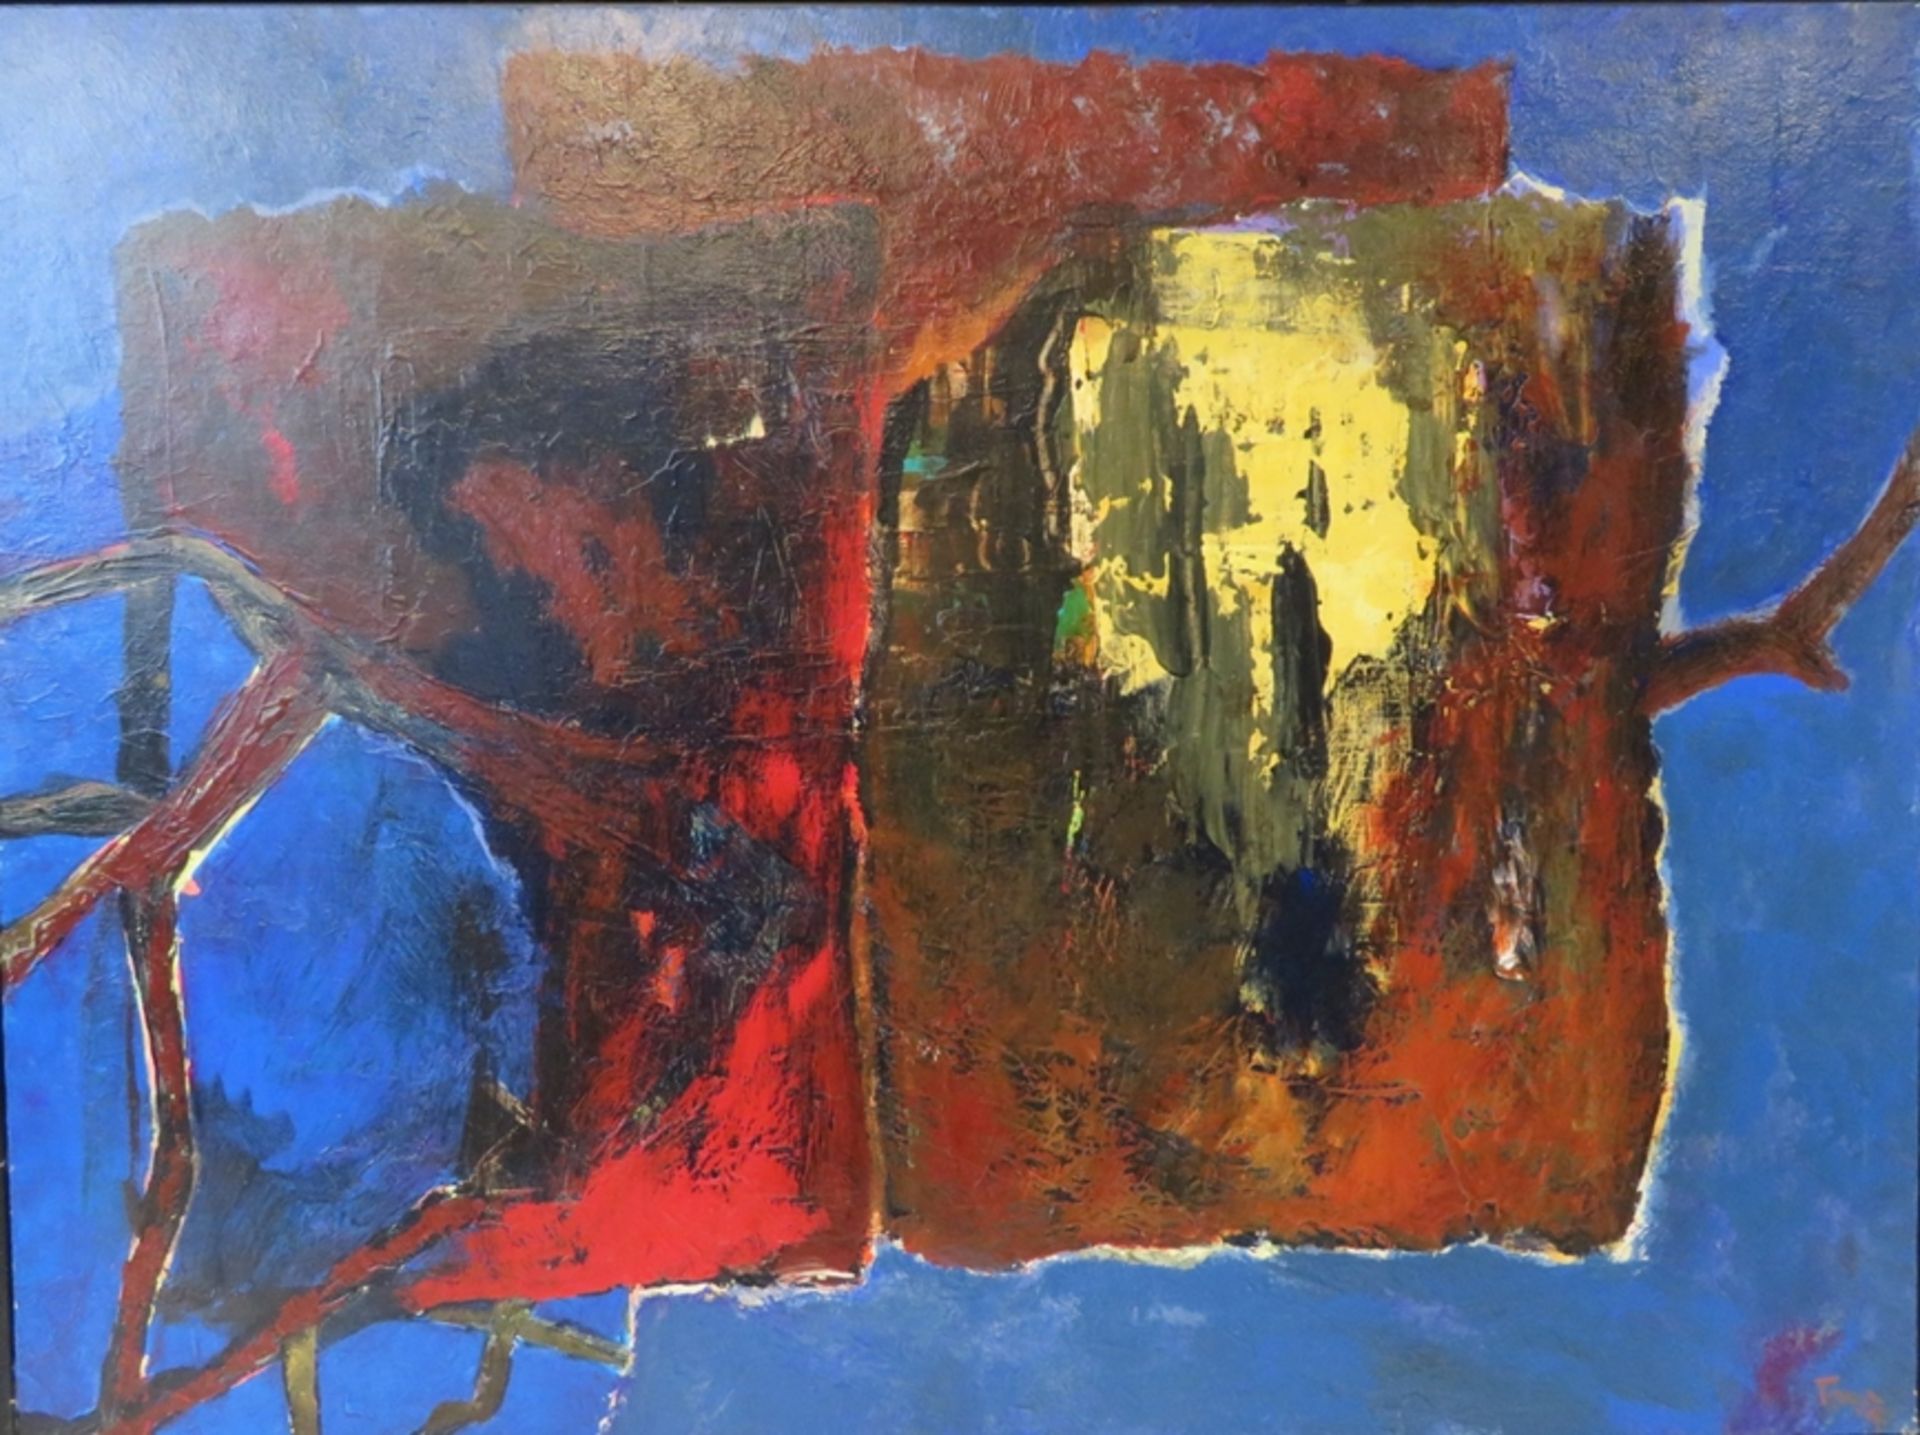 Franswa, Tom, "Ohne Titel", re.u.sign., Öl/Malerpappe, 59 x 80 cm, R. [68 x 88 cm]